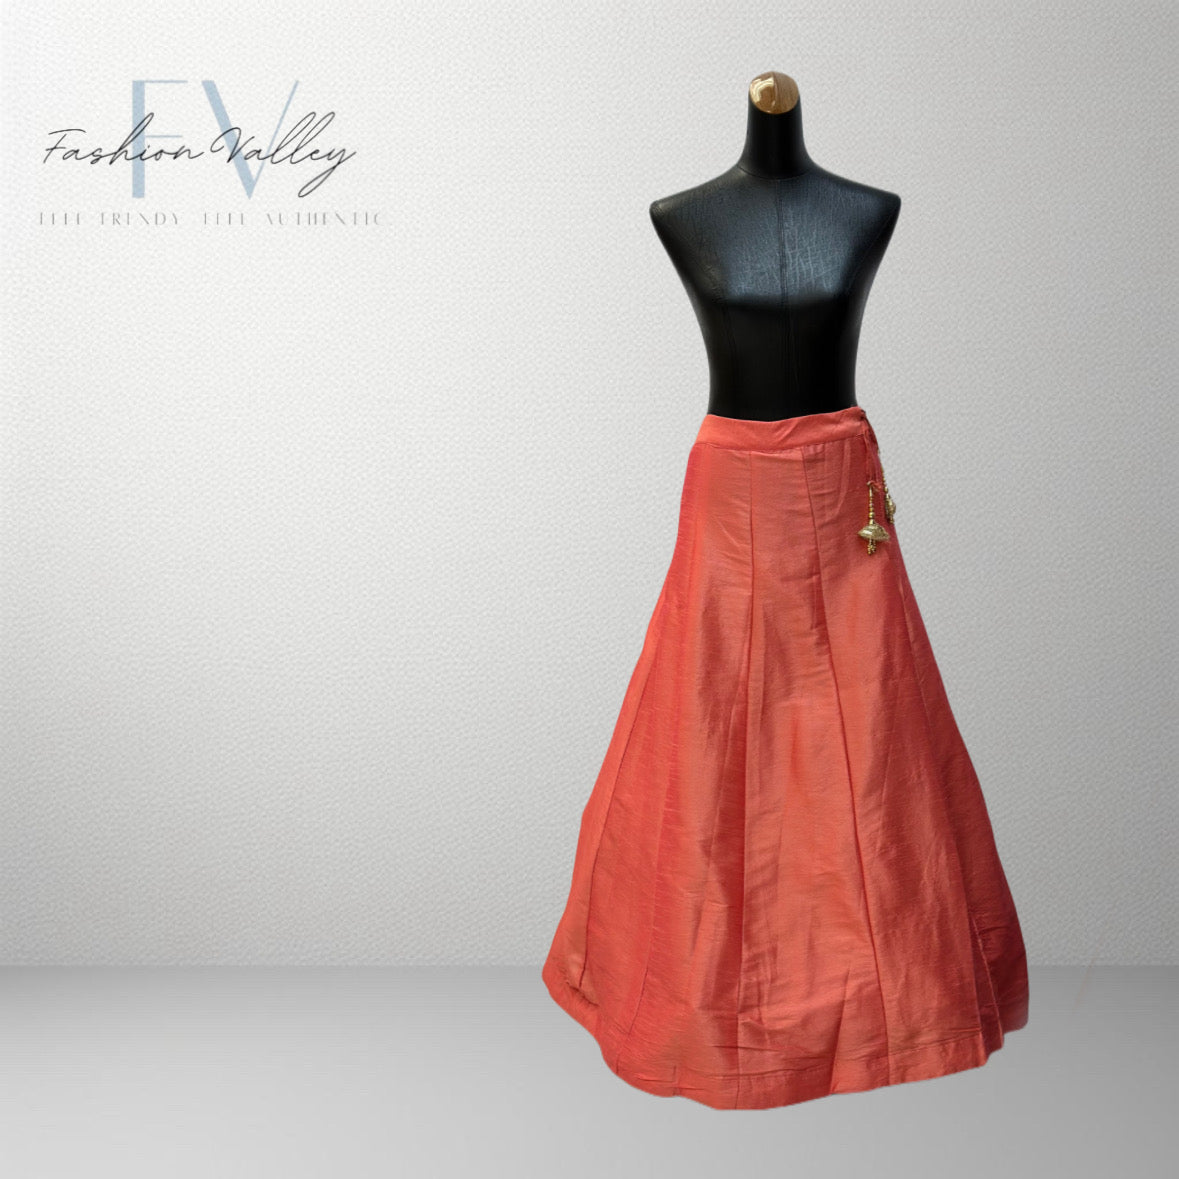 Raw-silk skirts